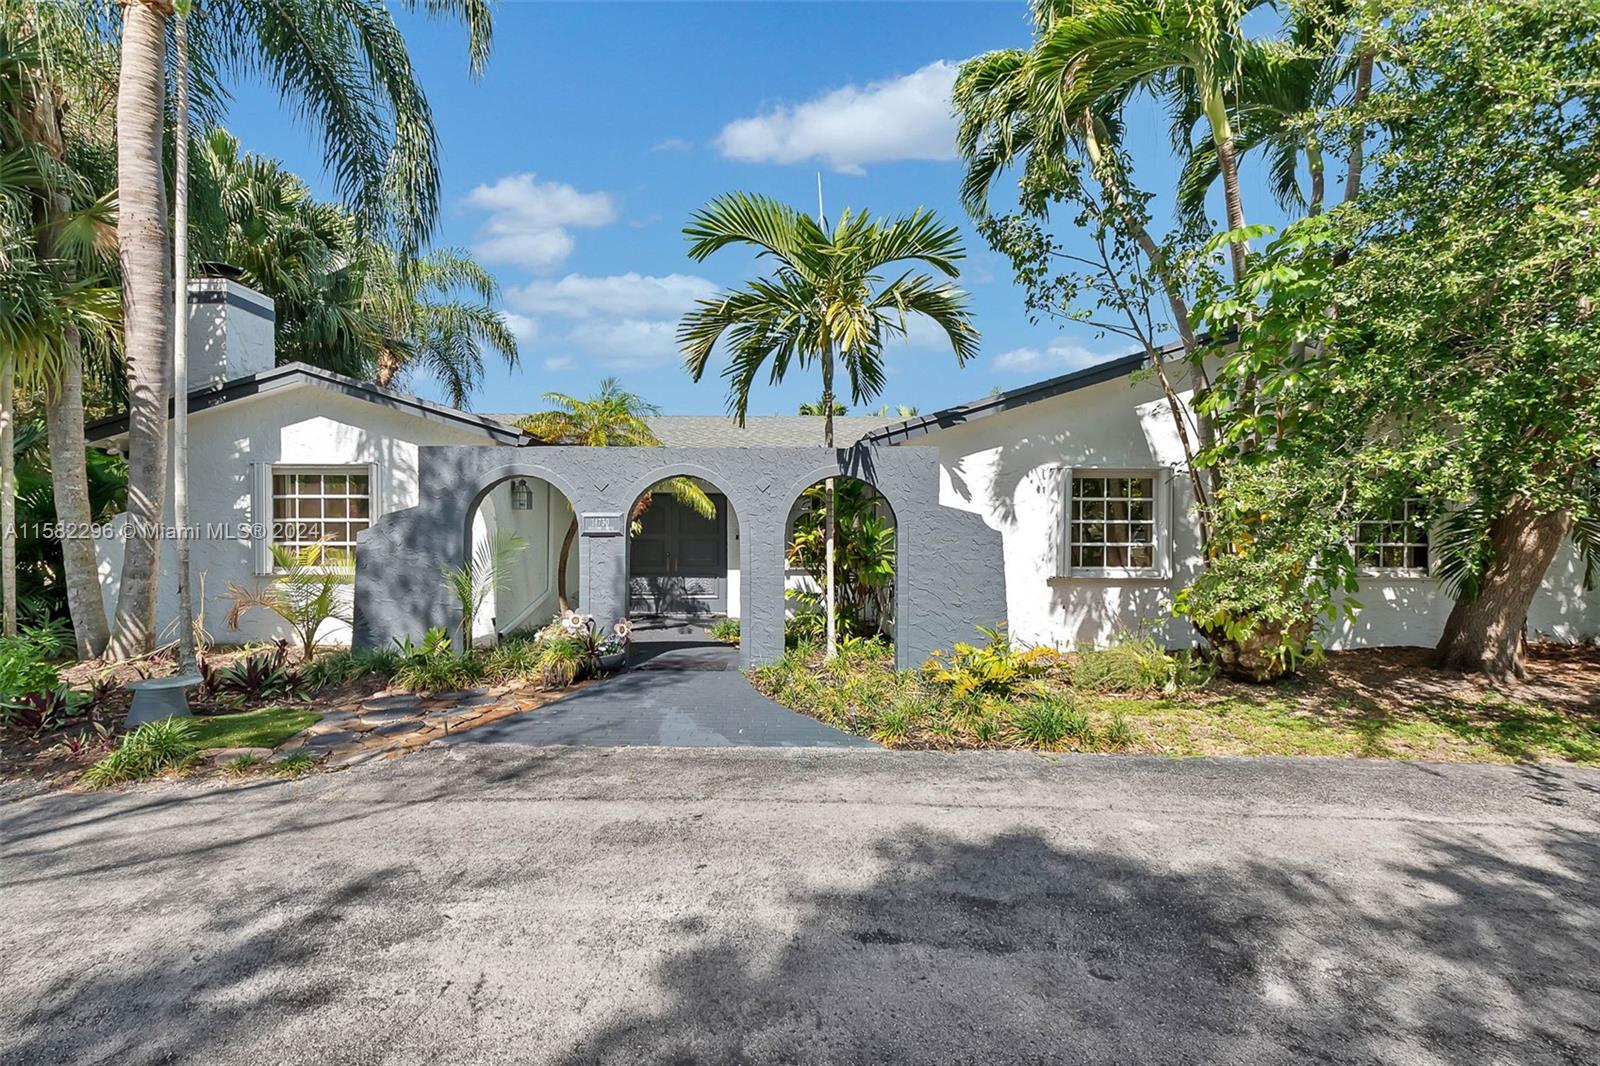 Property for Sale at 14730 Sailfish Dr, Coral Gables, Broward County, Florida - Bedrooms: 4 
Bathrooms: 3  - $1,699,000